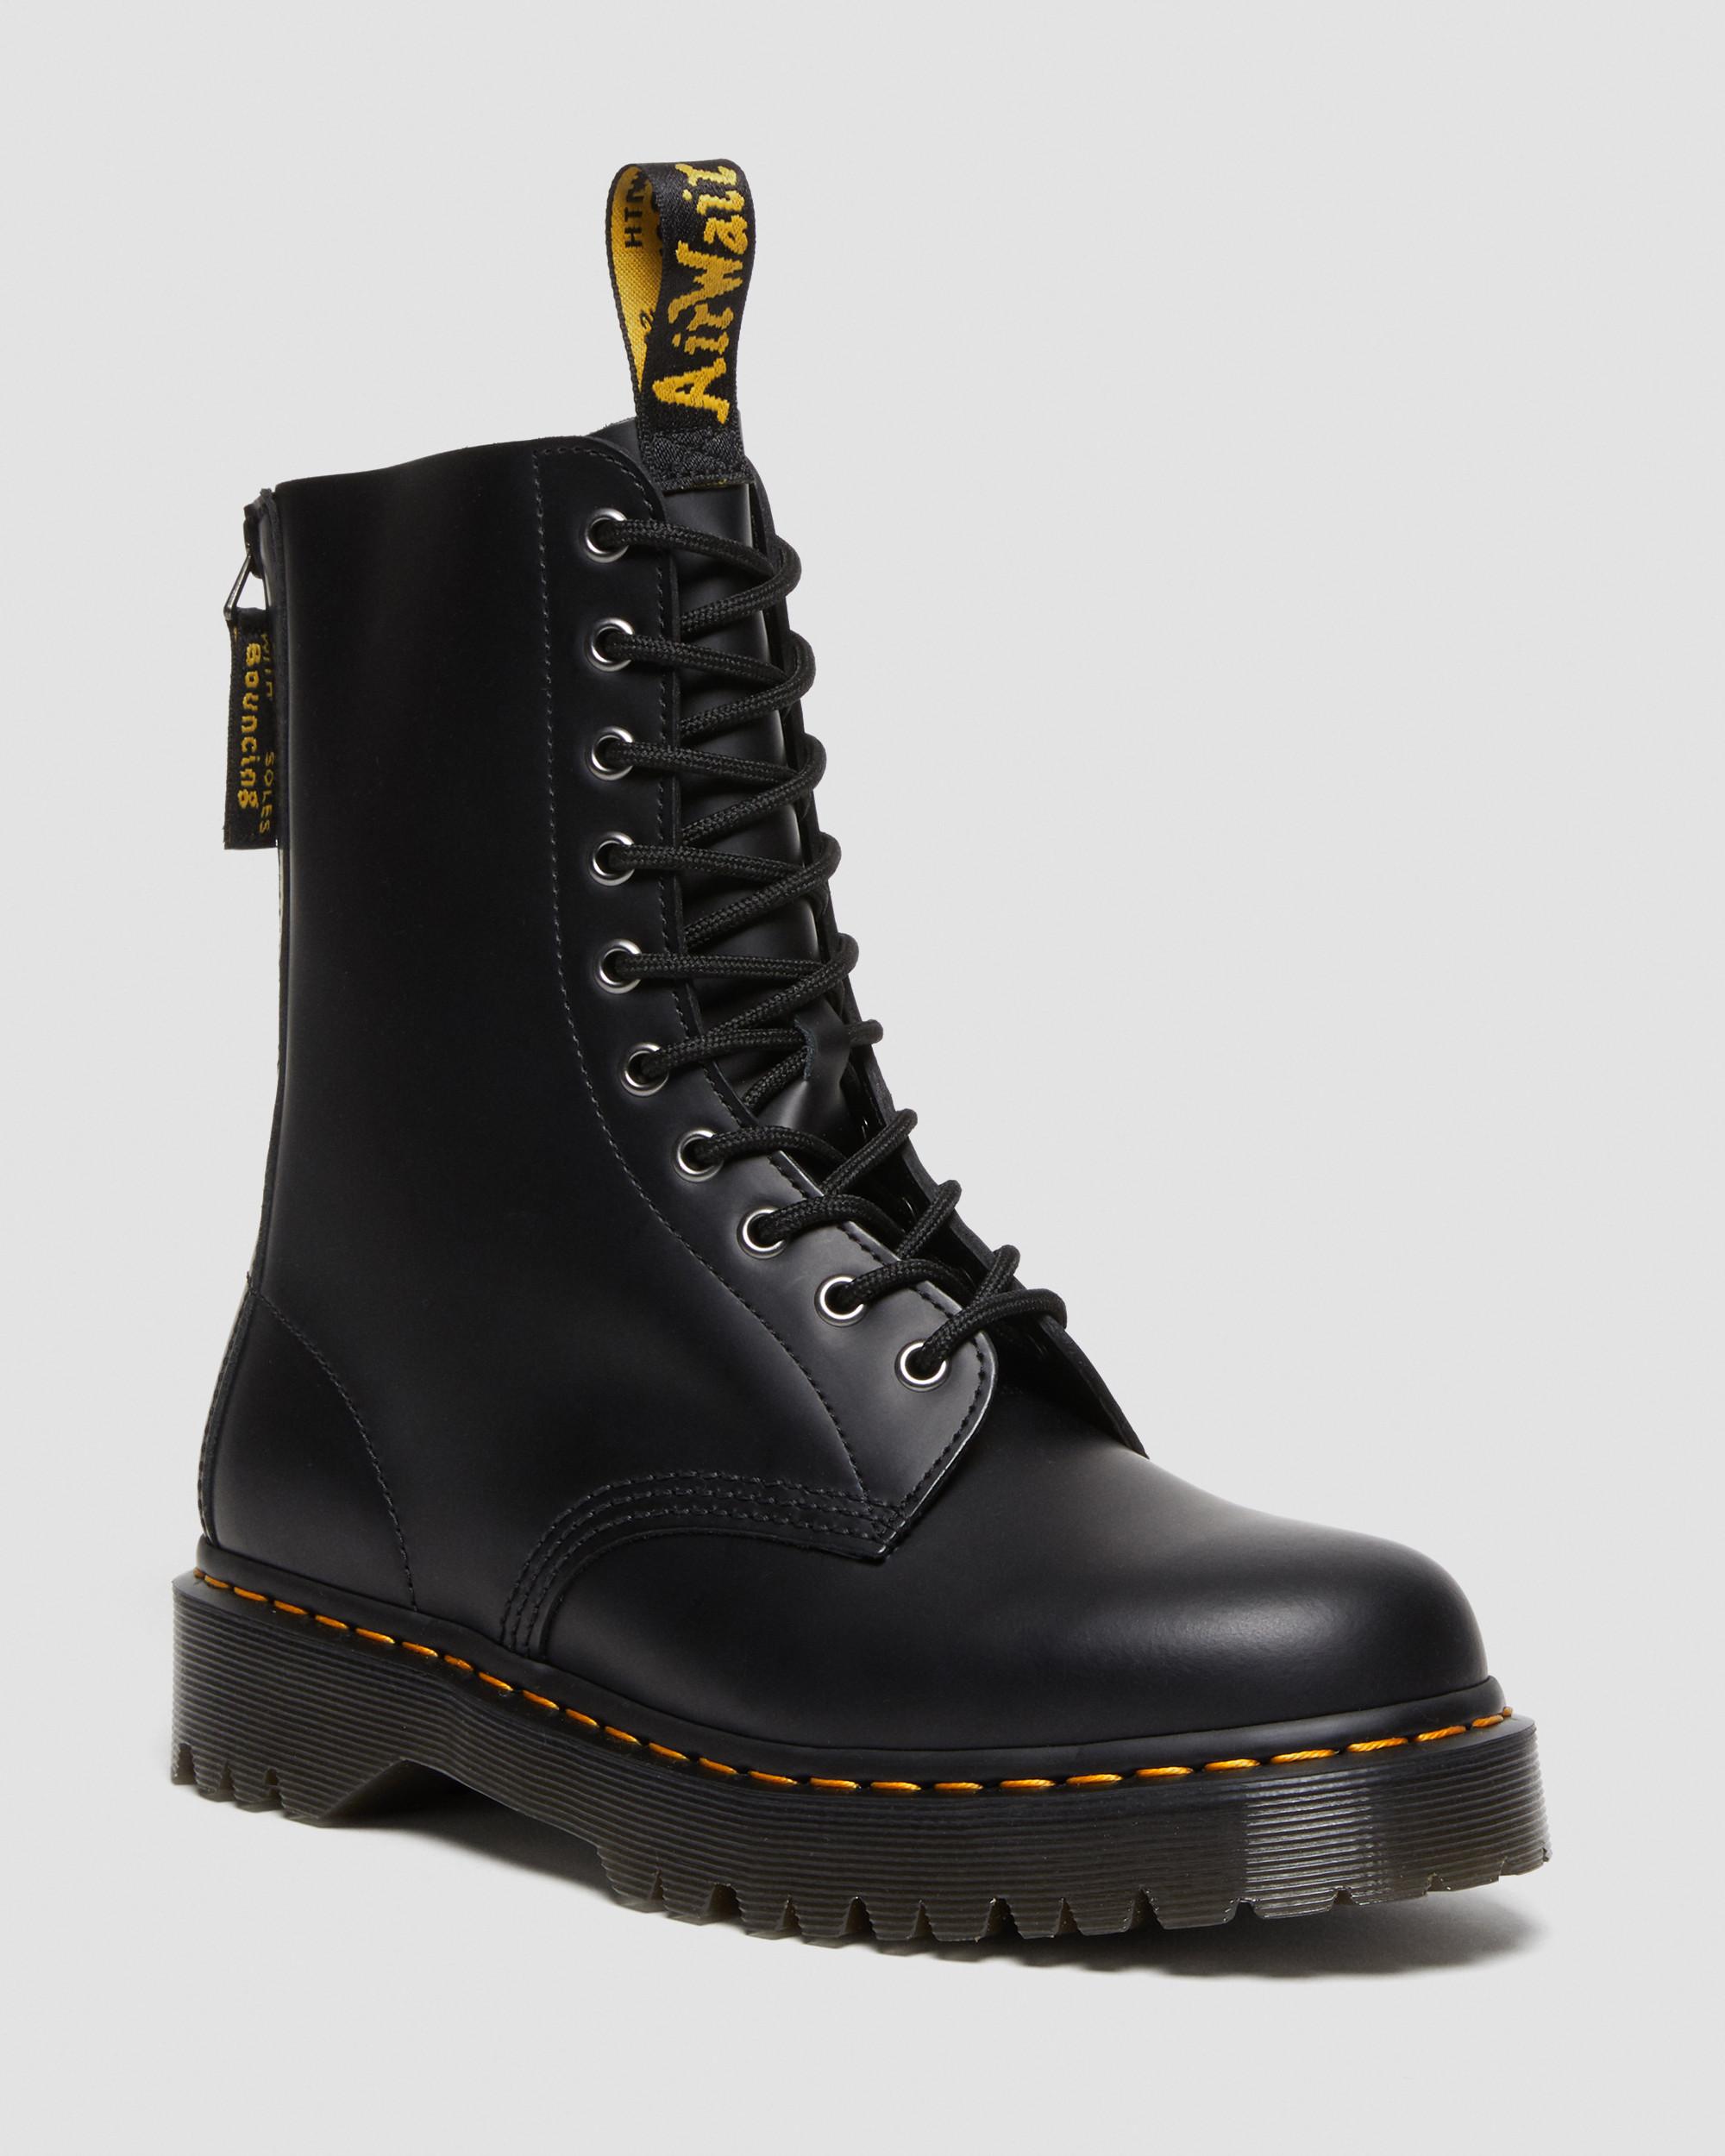 1490 Hi Bex Zip Leather Boots, Black | Dr. Martens